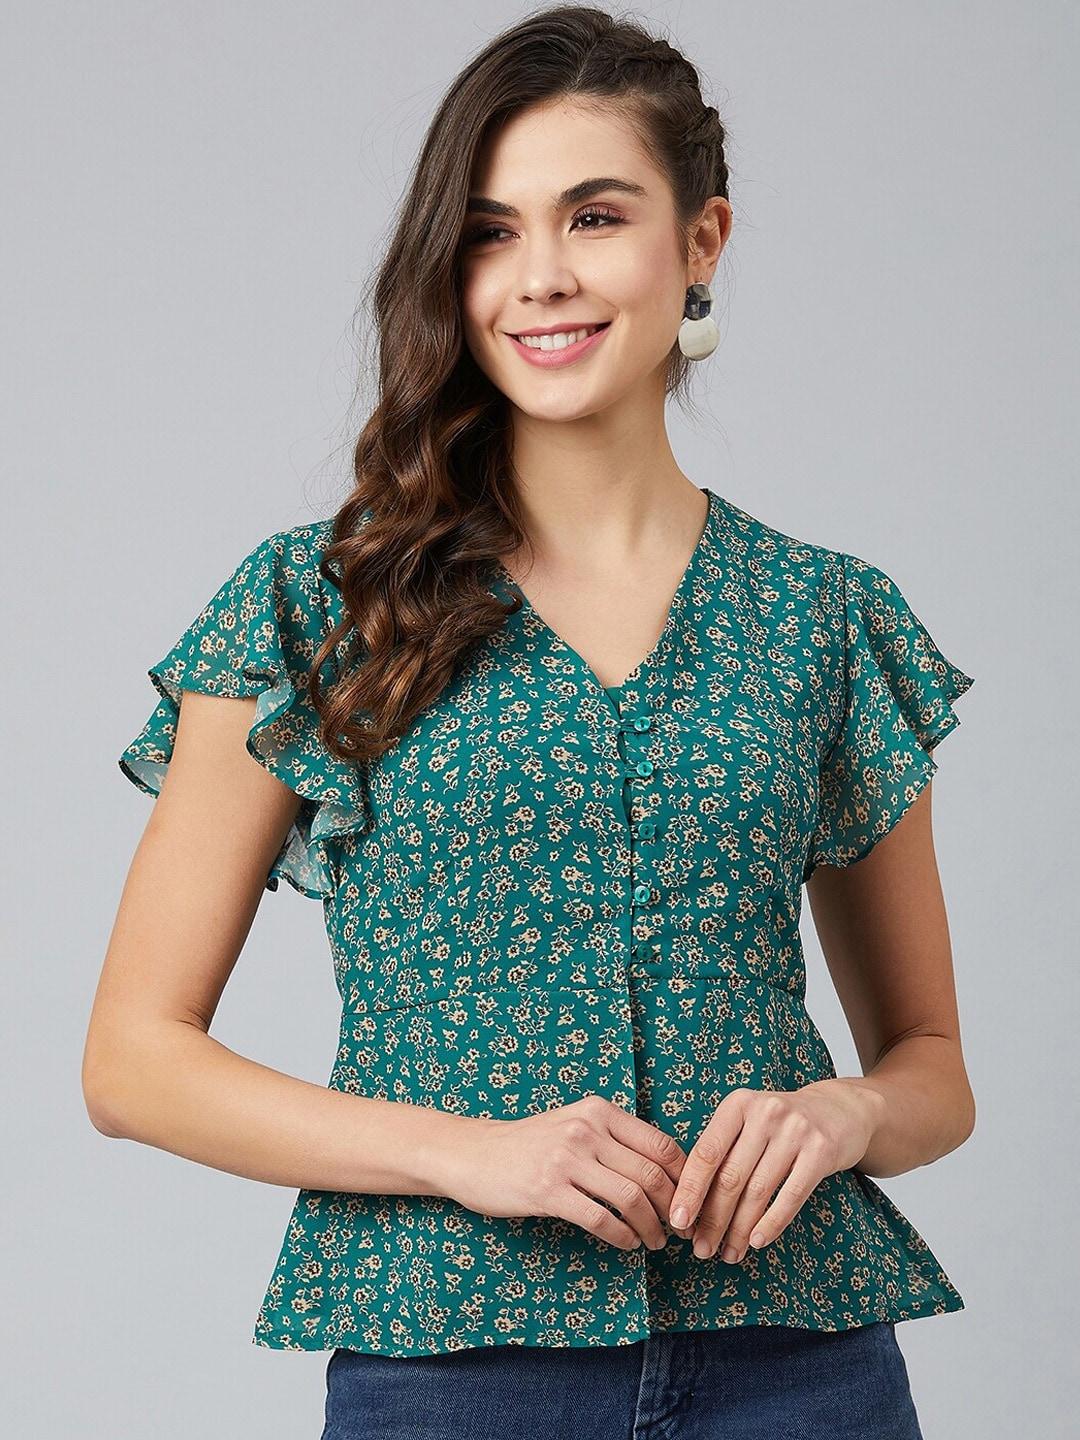 carlton-london-green-floral-printed-flutter-sleeves-georgette-top